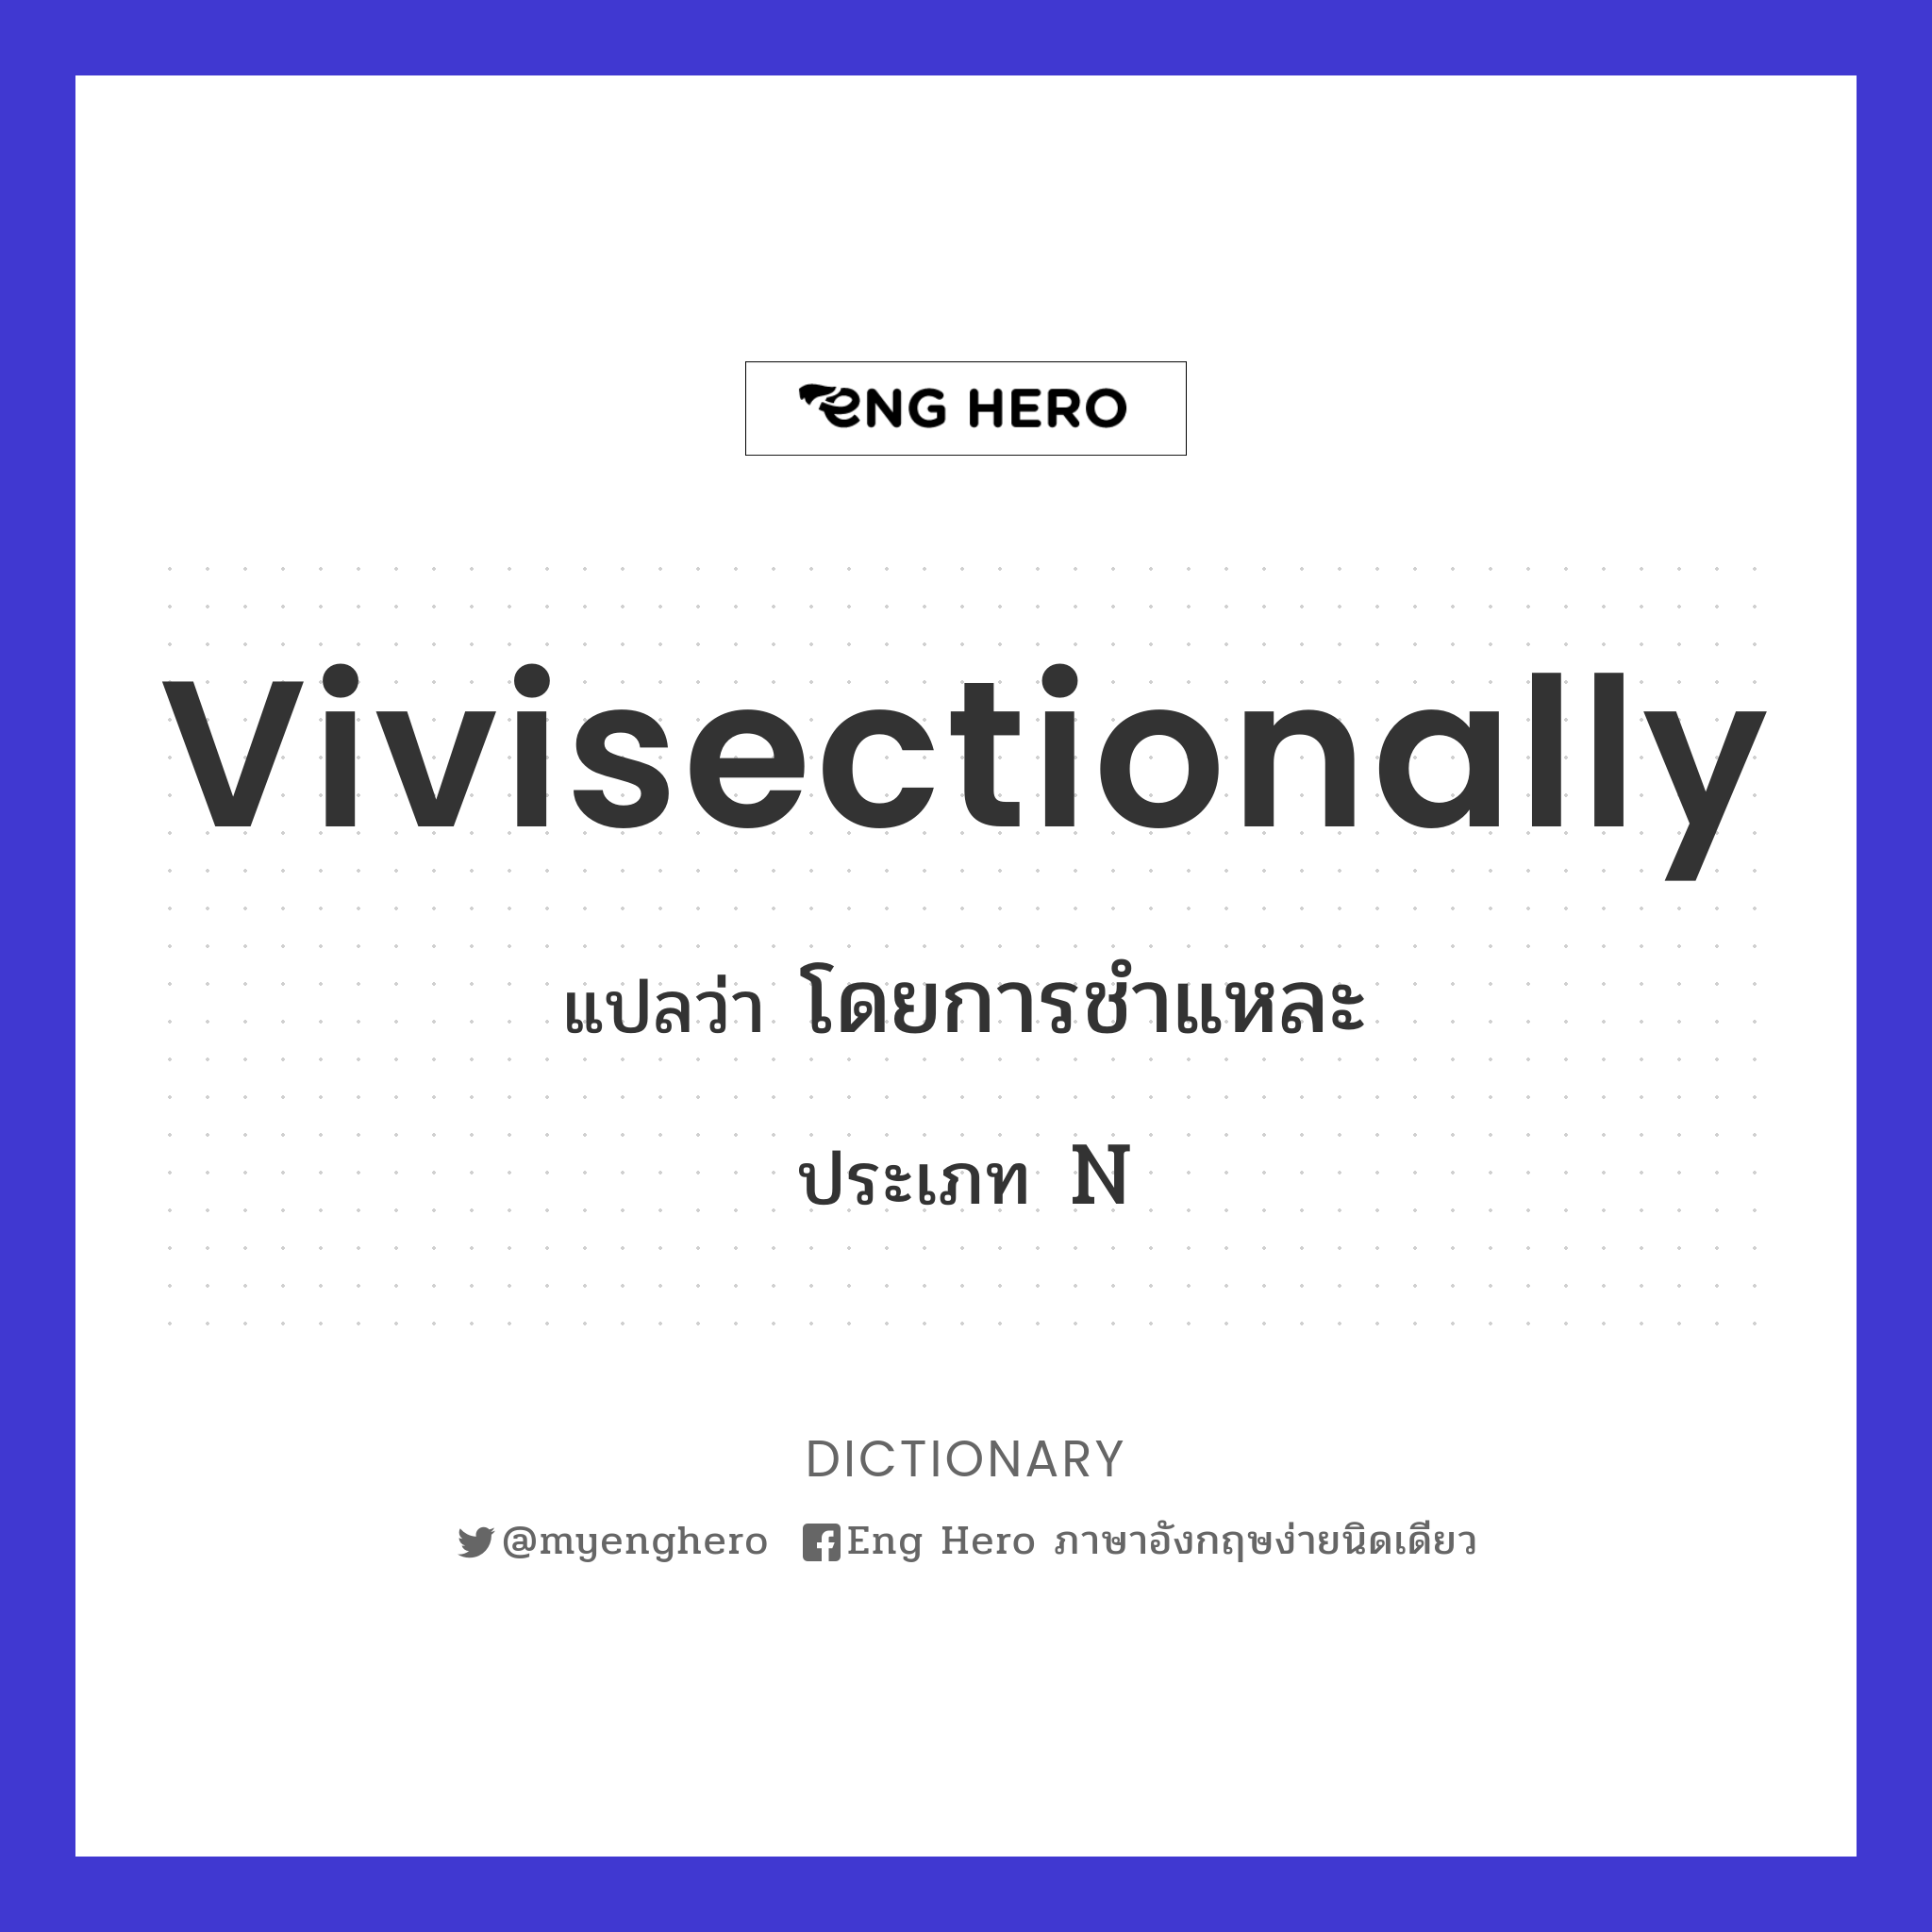 vivisectionally